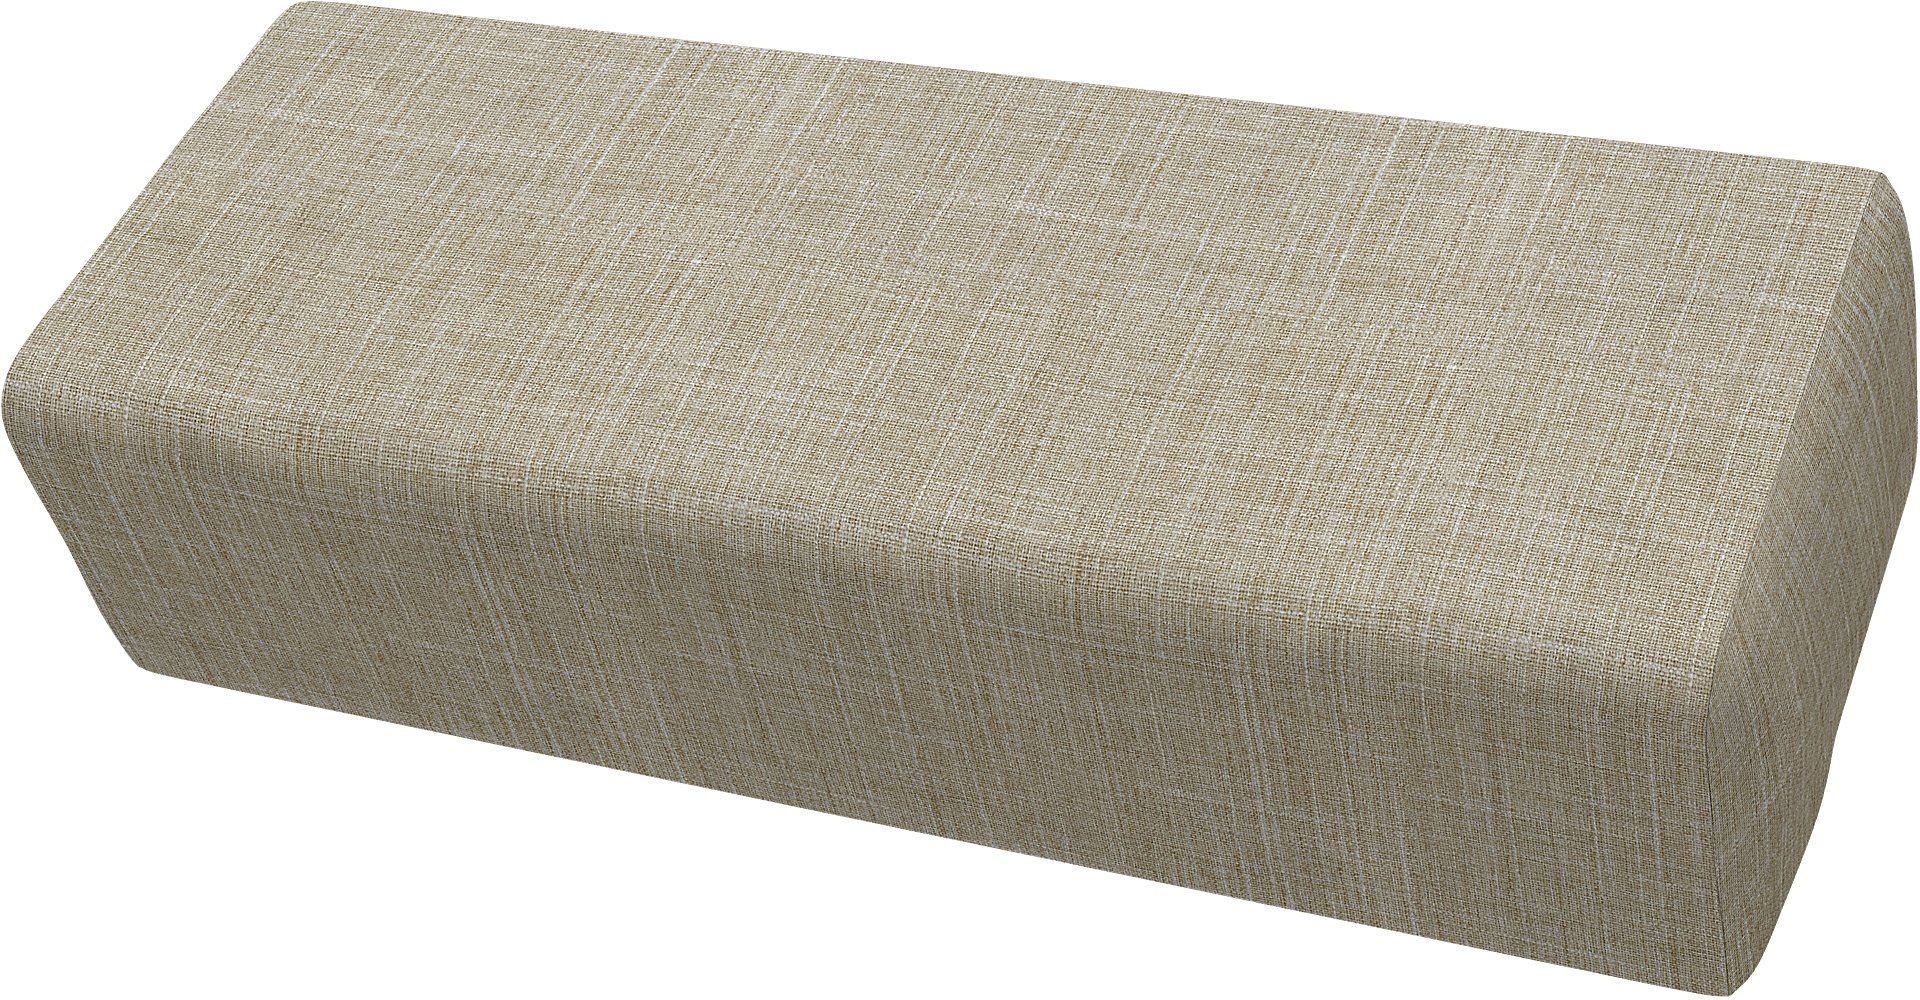 IKEA - Jattebo Headrest Cushion Cover, Sand Beige, Boucle & Texture - Bemz